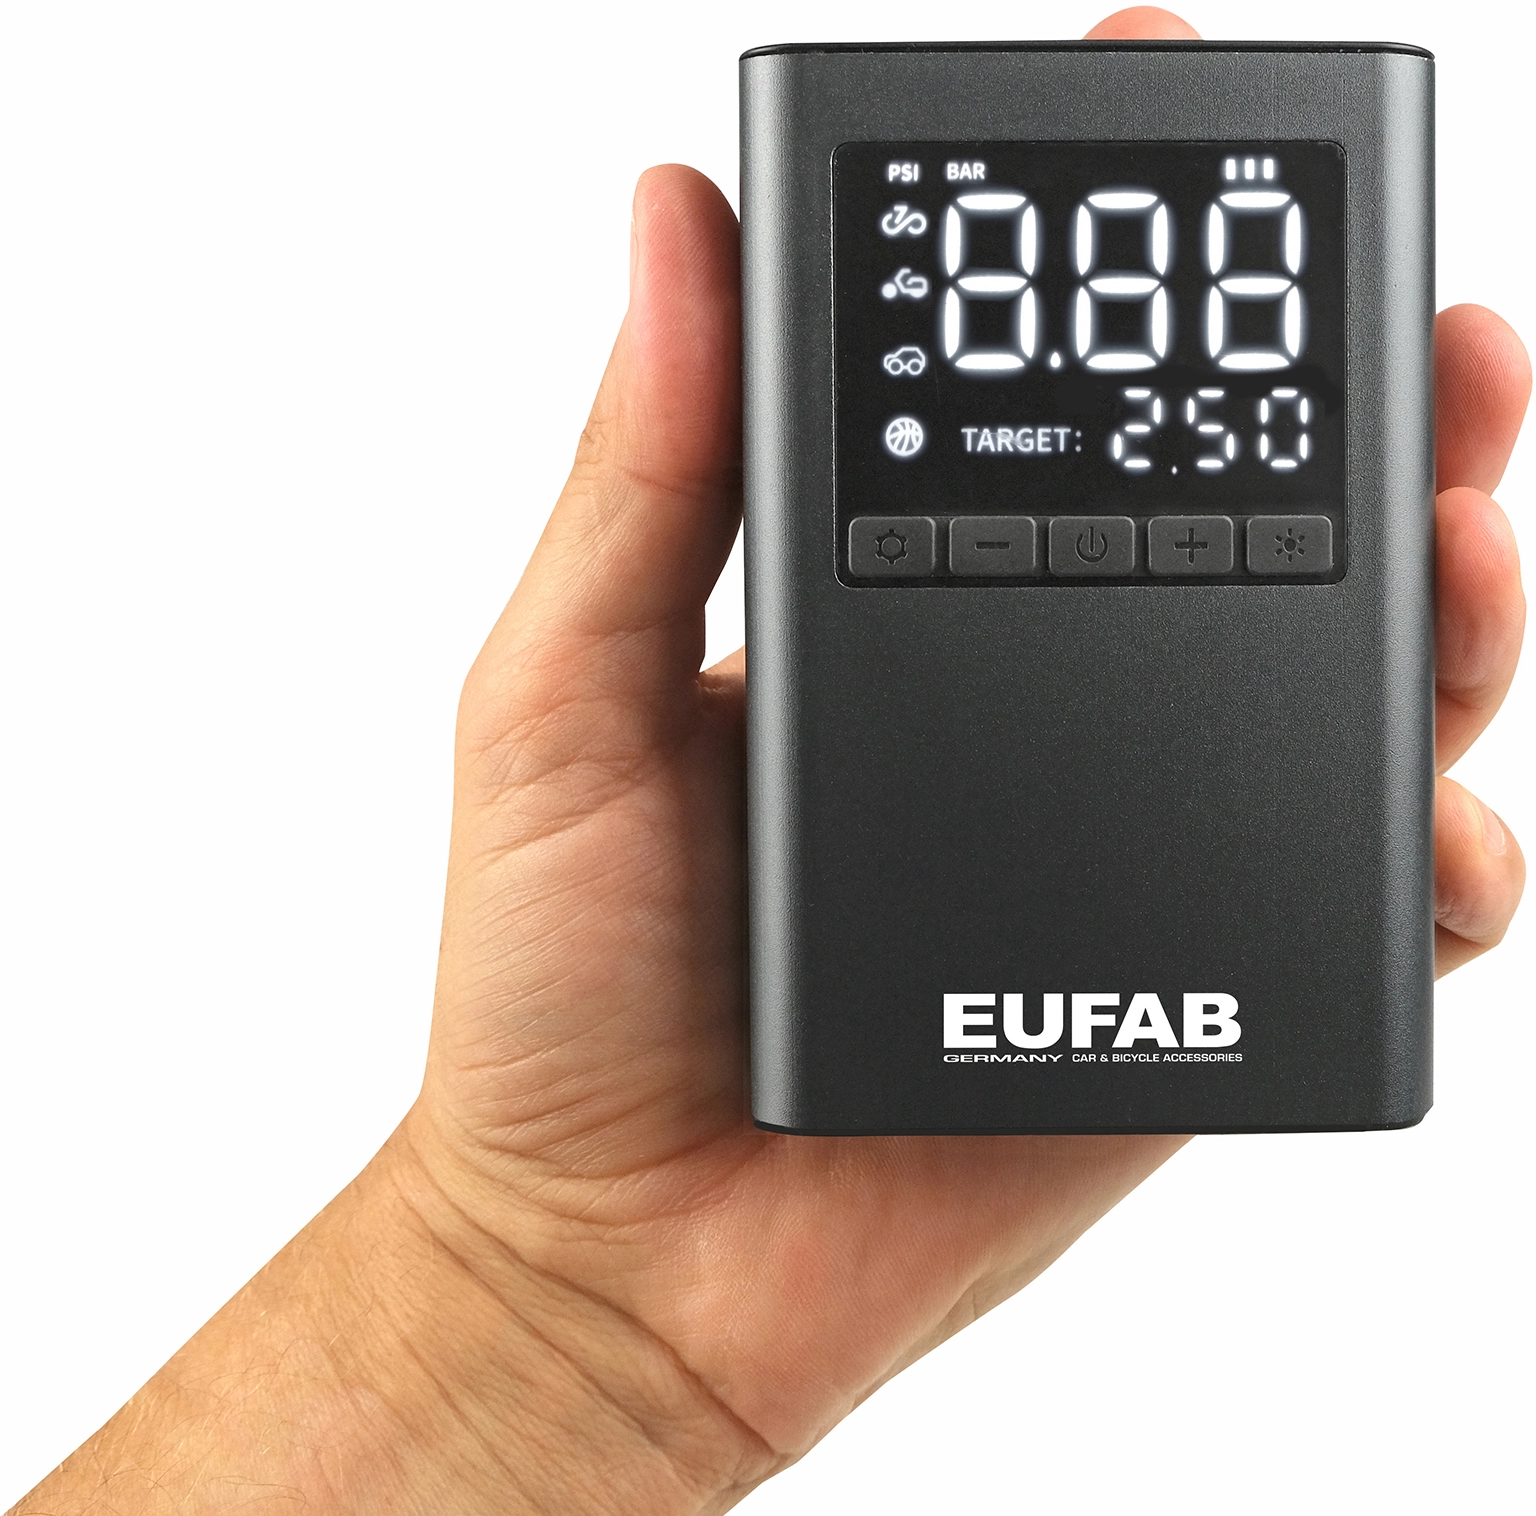 Eufab Mini-Kompressor Aufladbar kaufen bei OBI